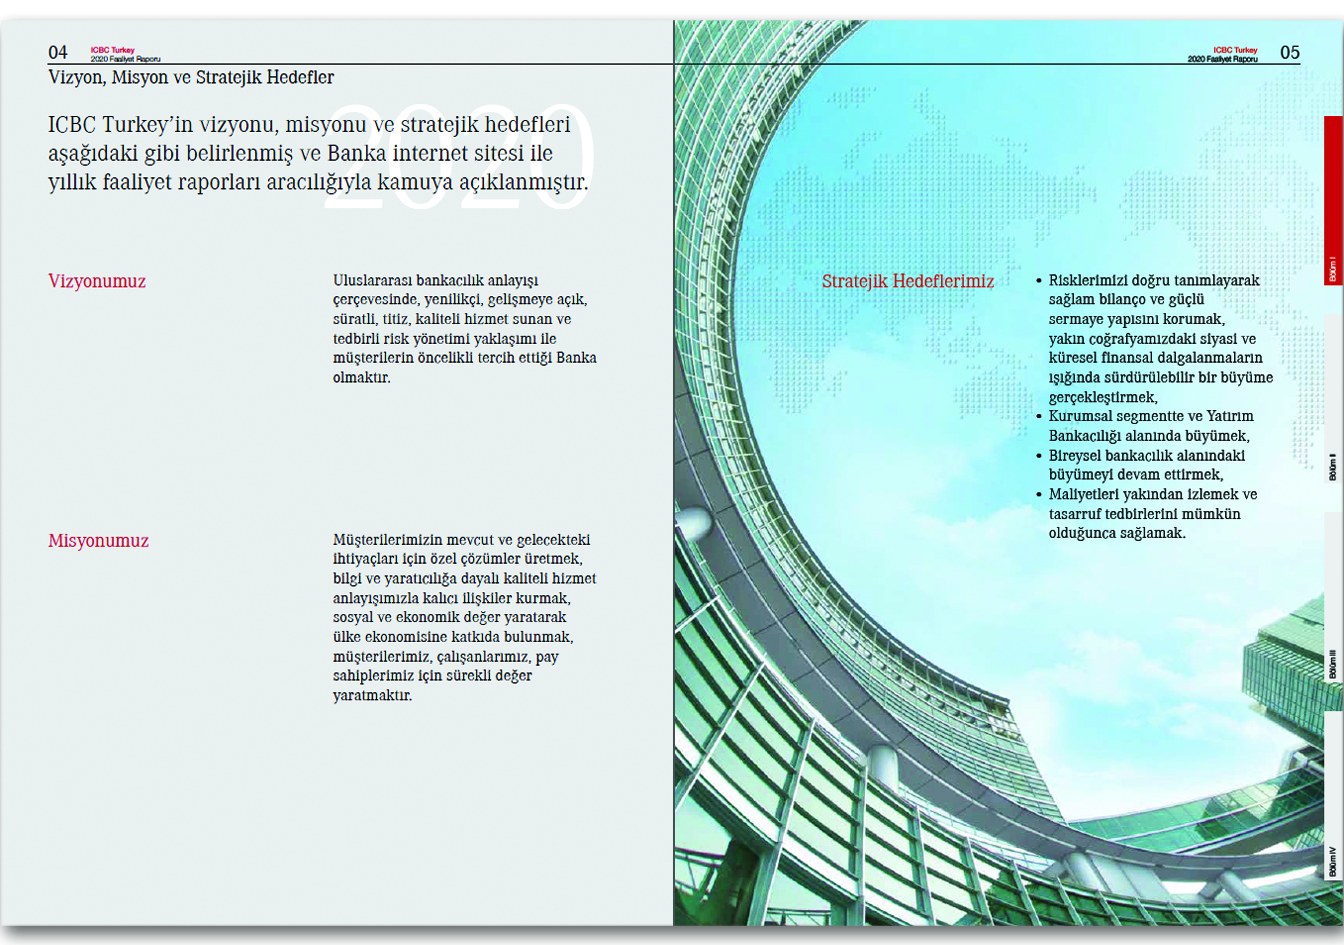 ICBC BANK TURKEY / 2020 Faaliyet Raporu / 2020 Annual Report